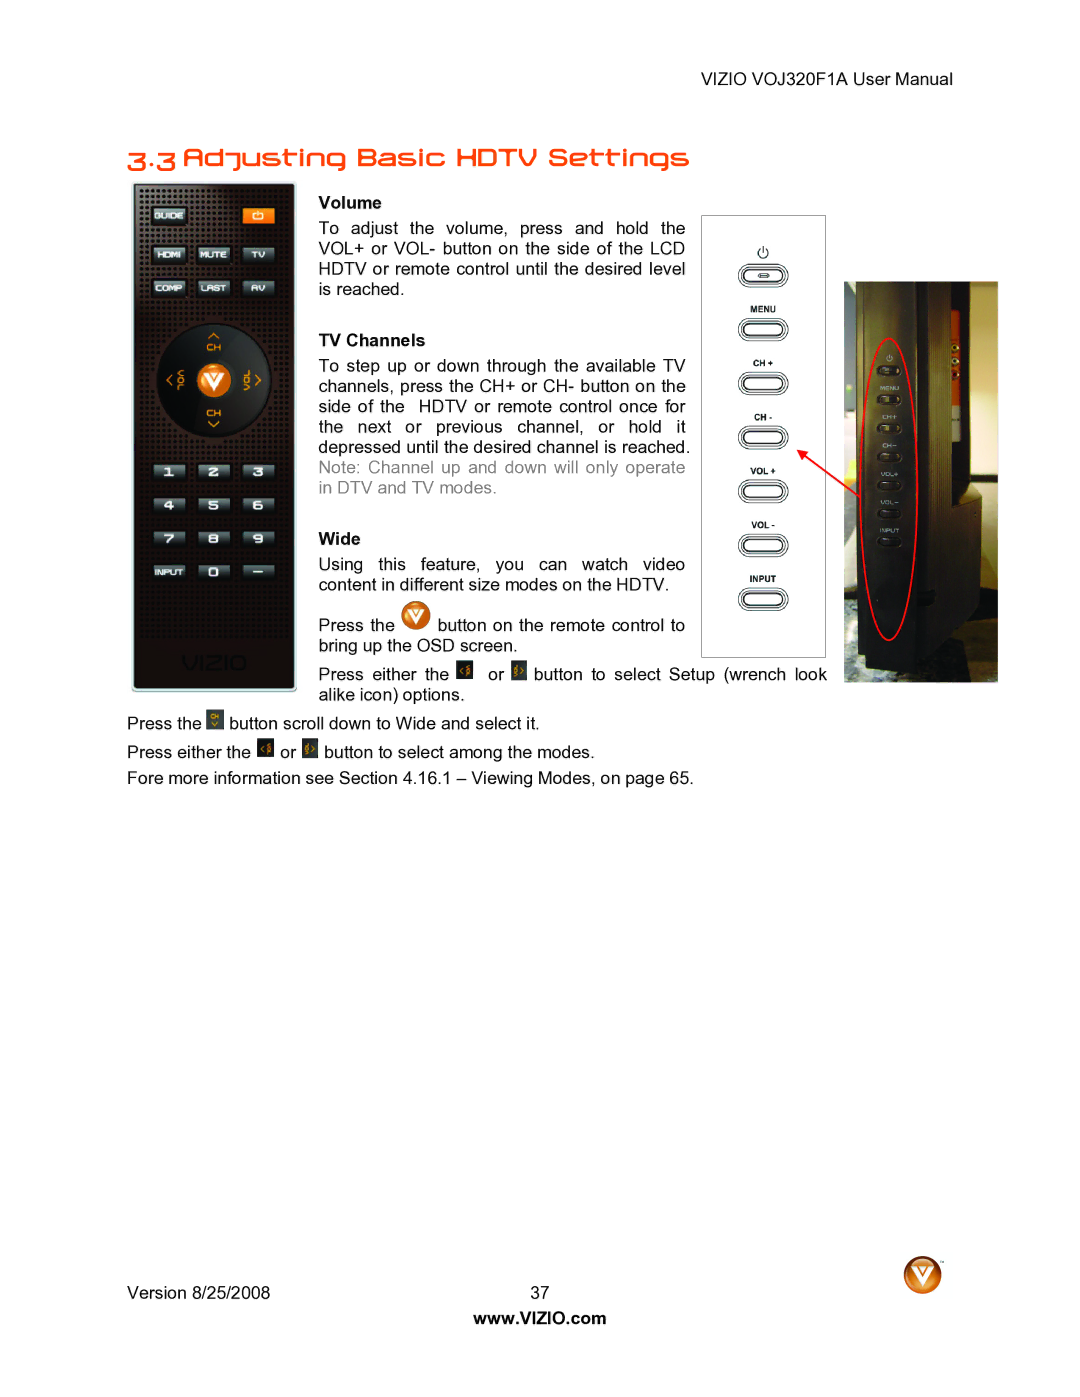 Vizio VOJ320F1A user manual Adjusting Basic Hdtv Settings, Volume, TV Channels, Wide 